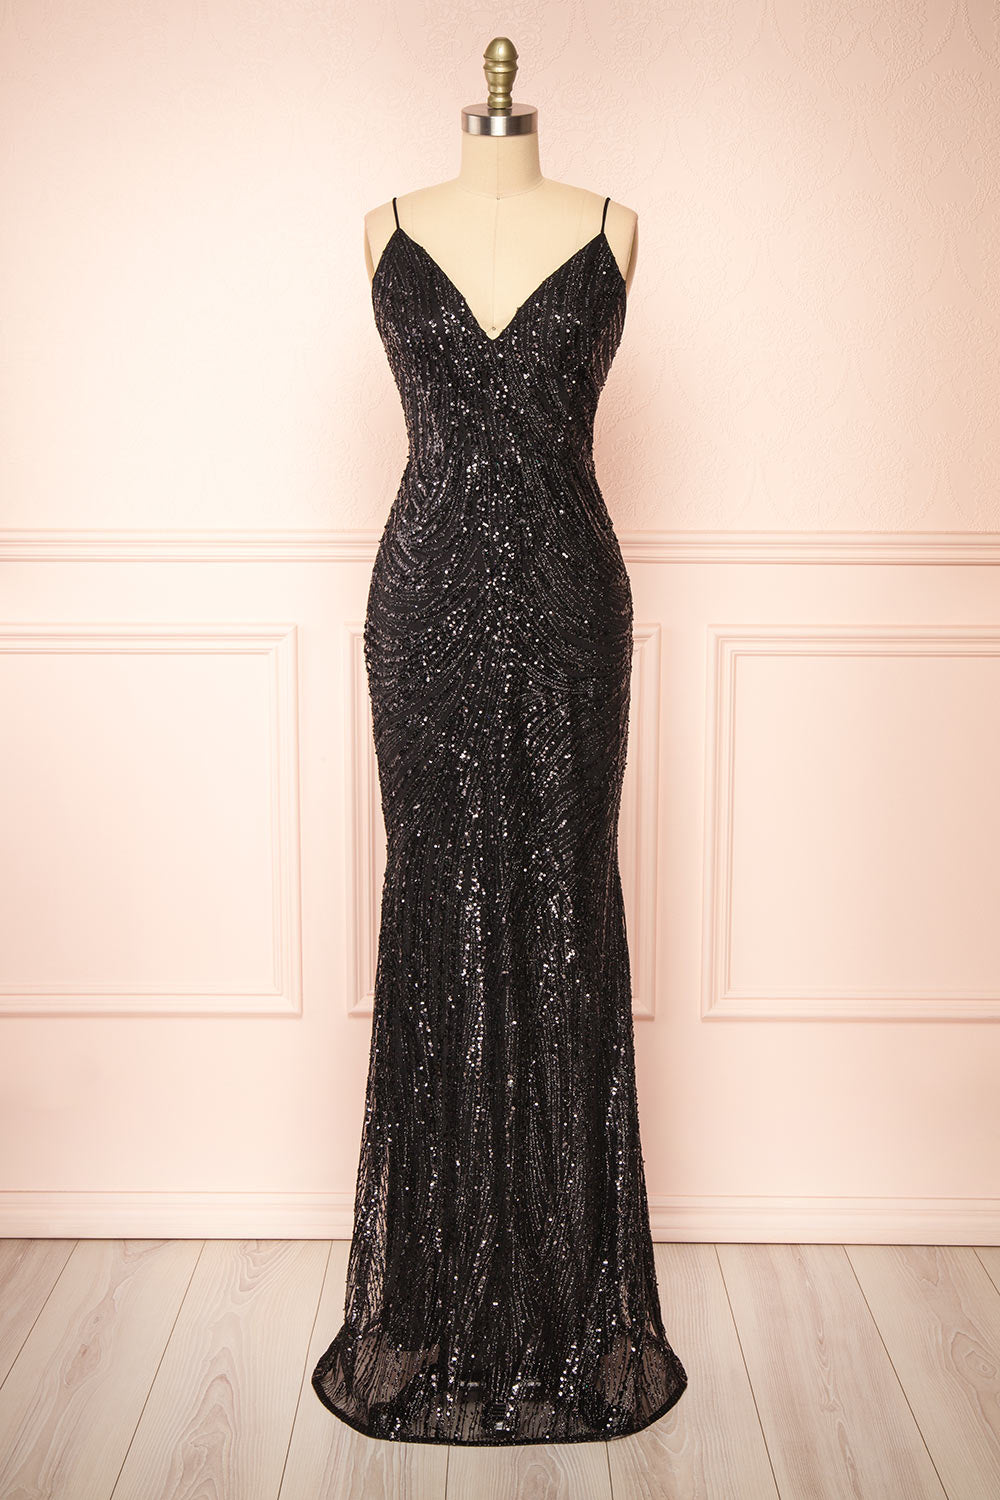 Isolina Black Sparkly Sequin Maxi Dress